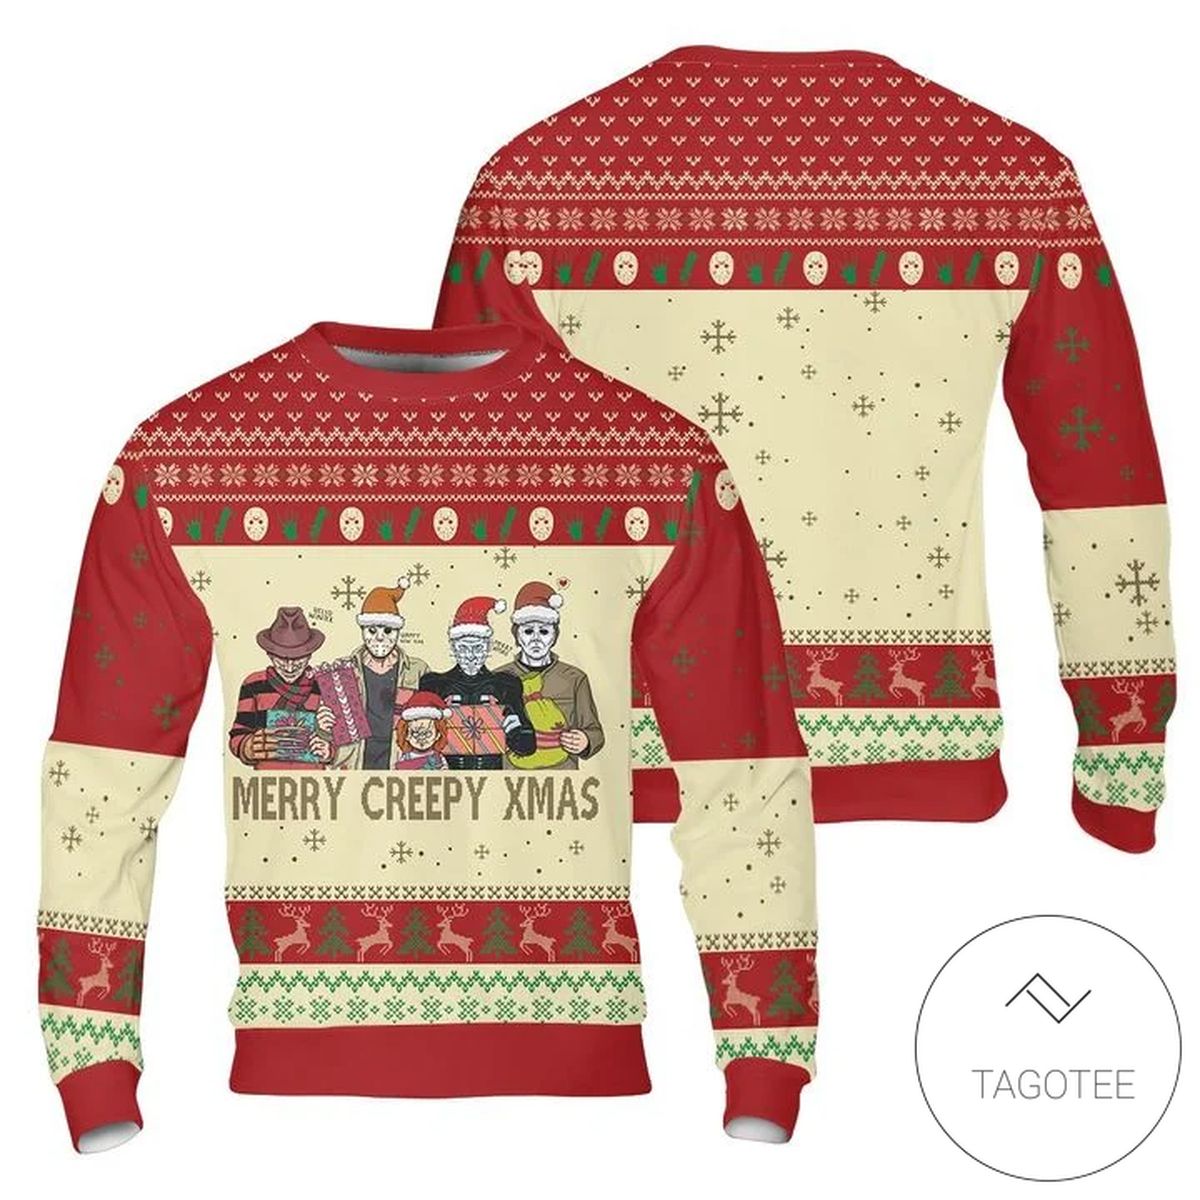 Merry Creepy Xmas Ugly Christmas Sweater